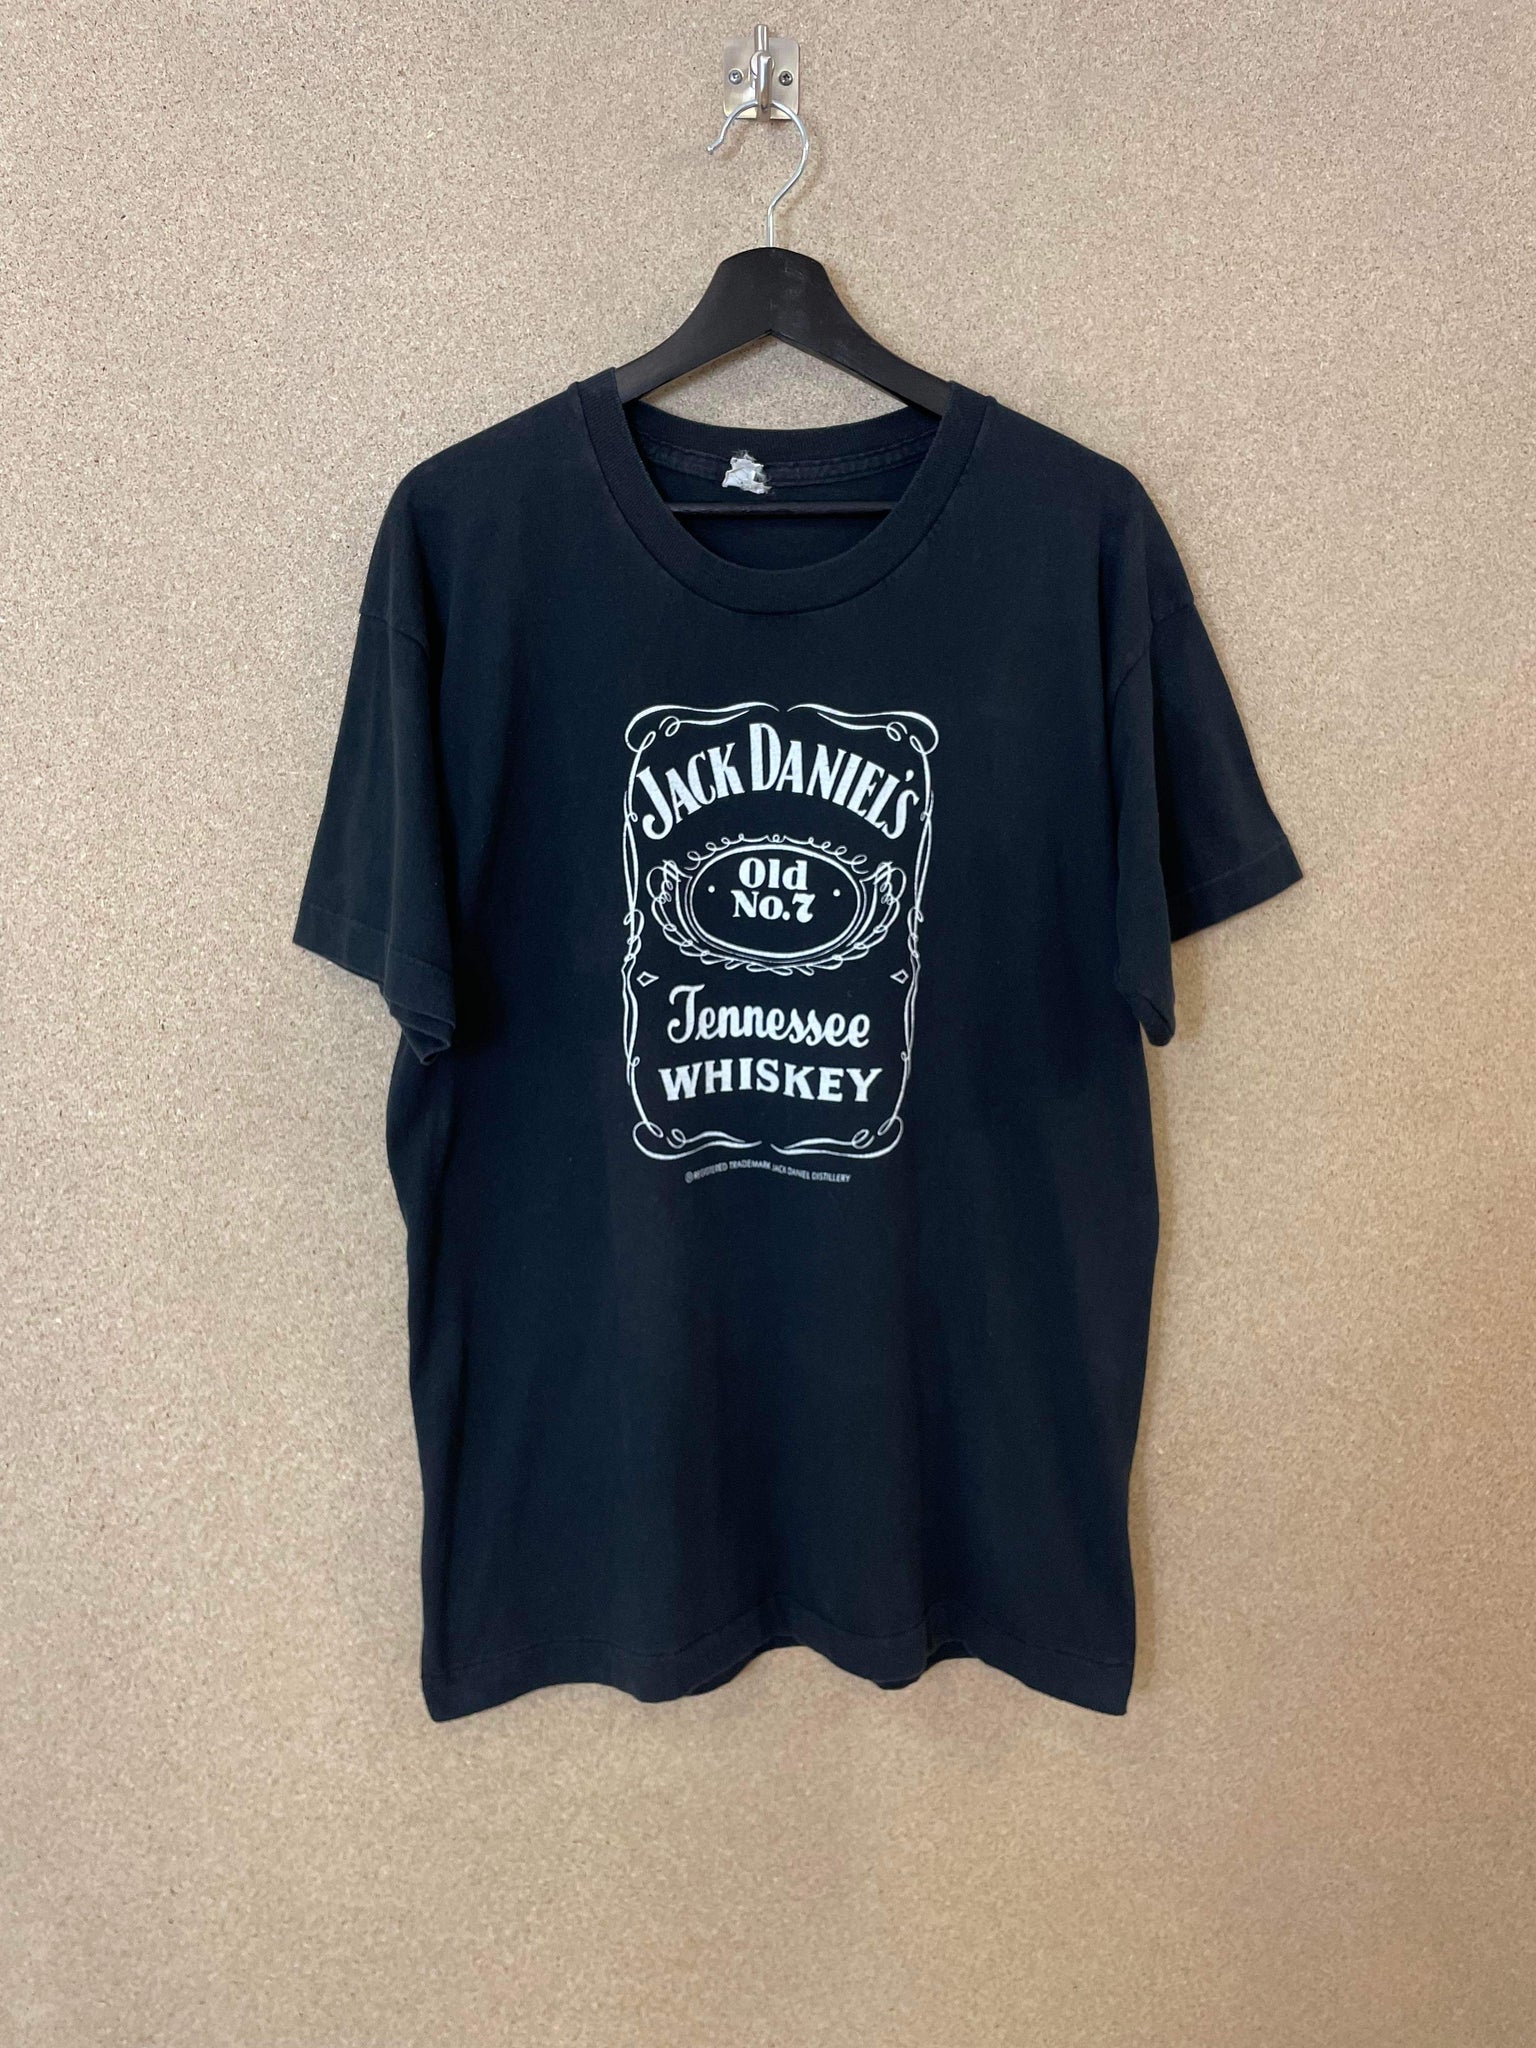 Vintage Jack Daniels Tennessee Whiskey 90s Tee - L